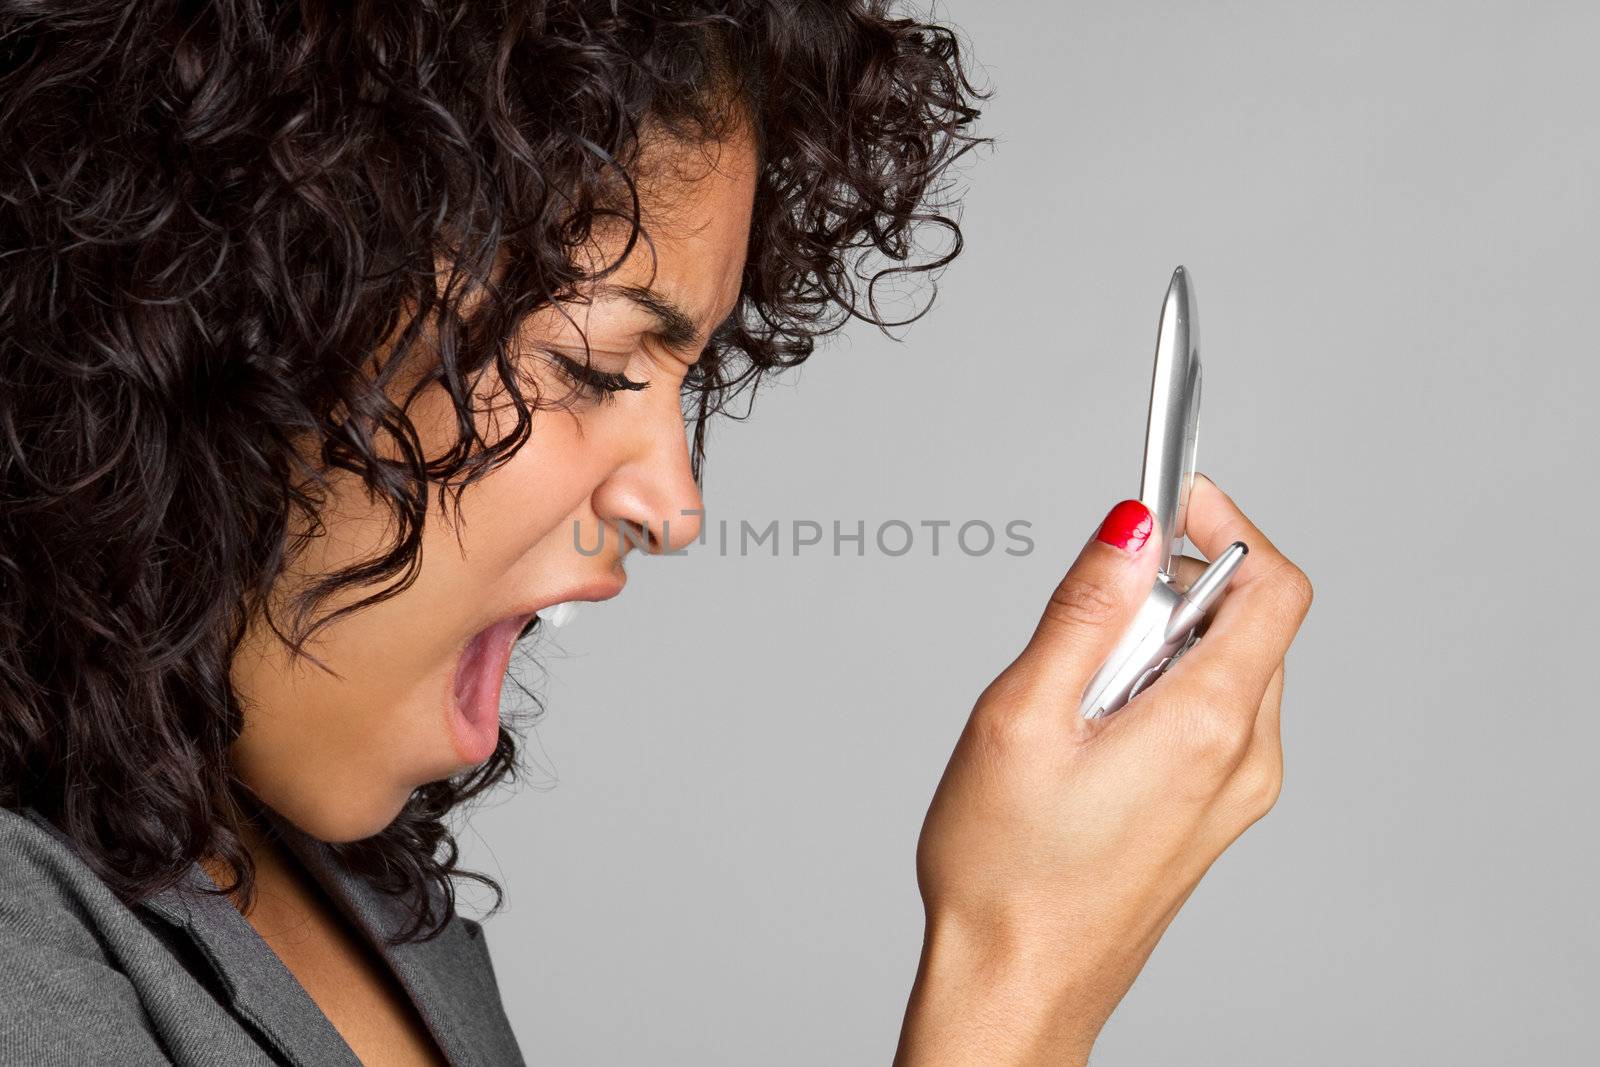 Black woman yelling into phone